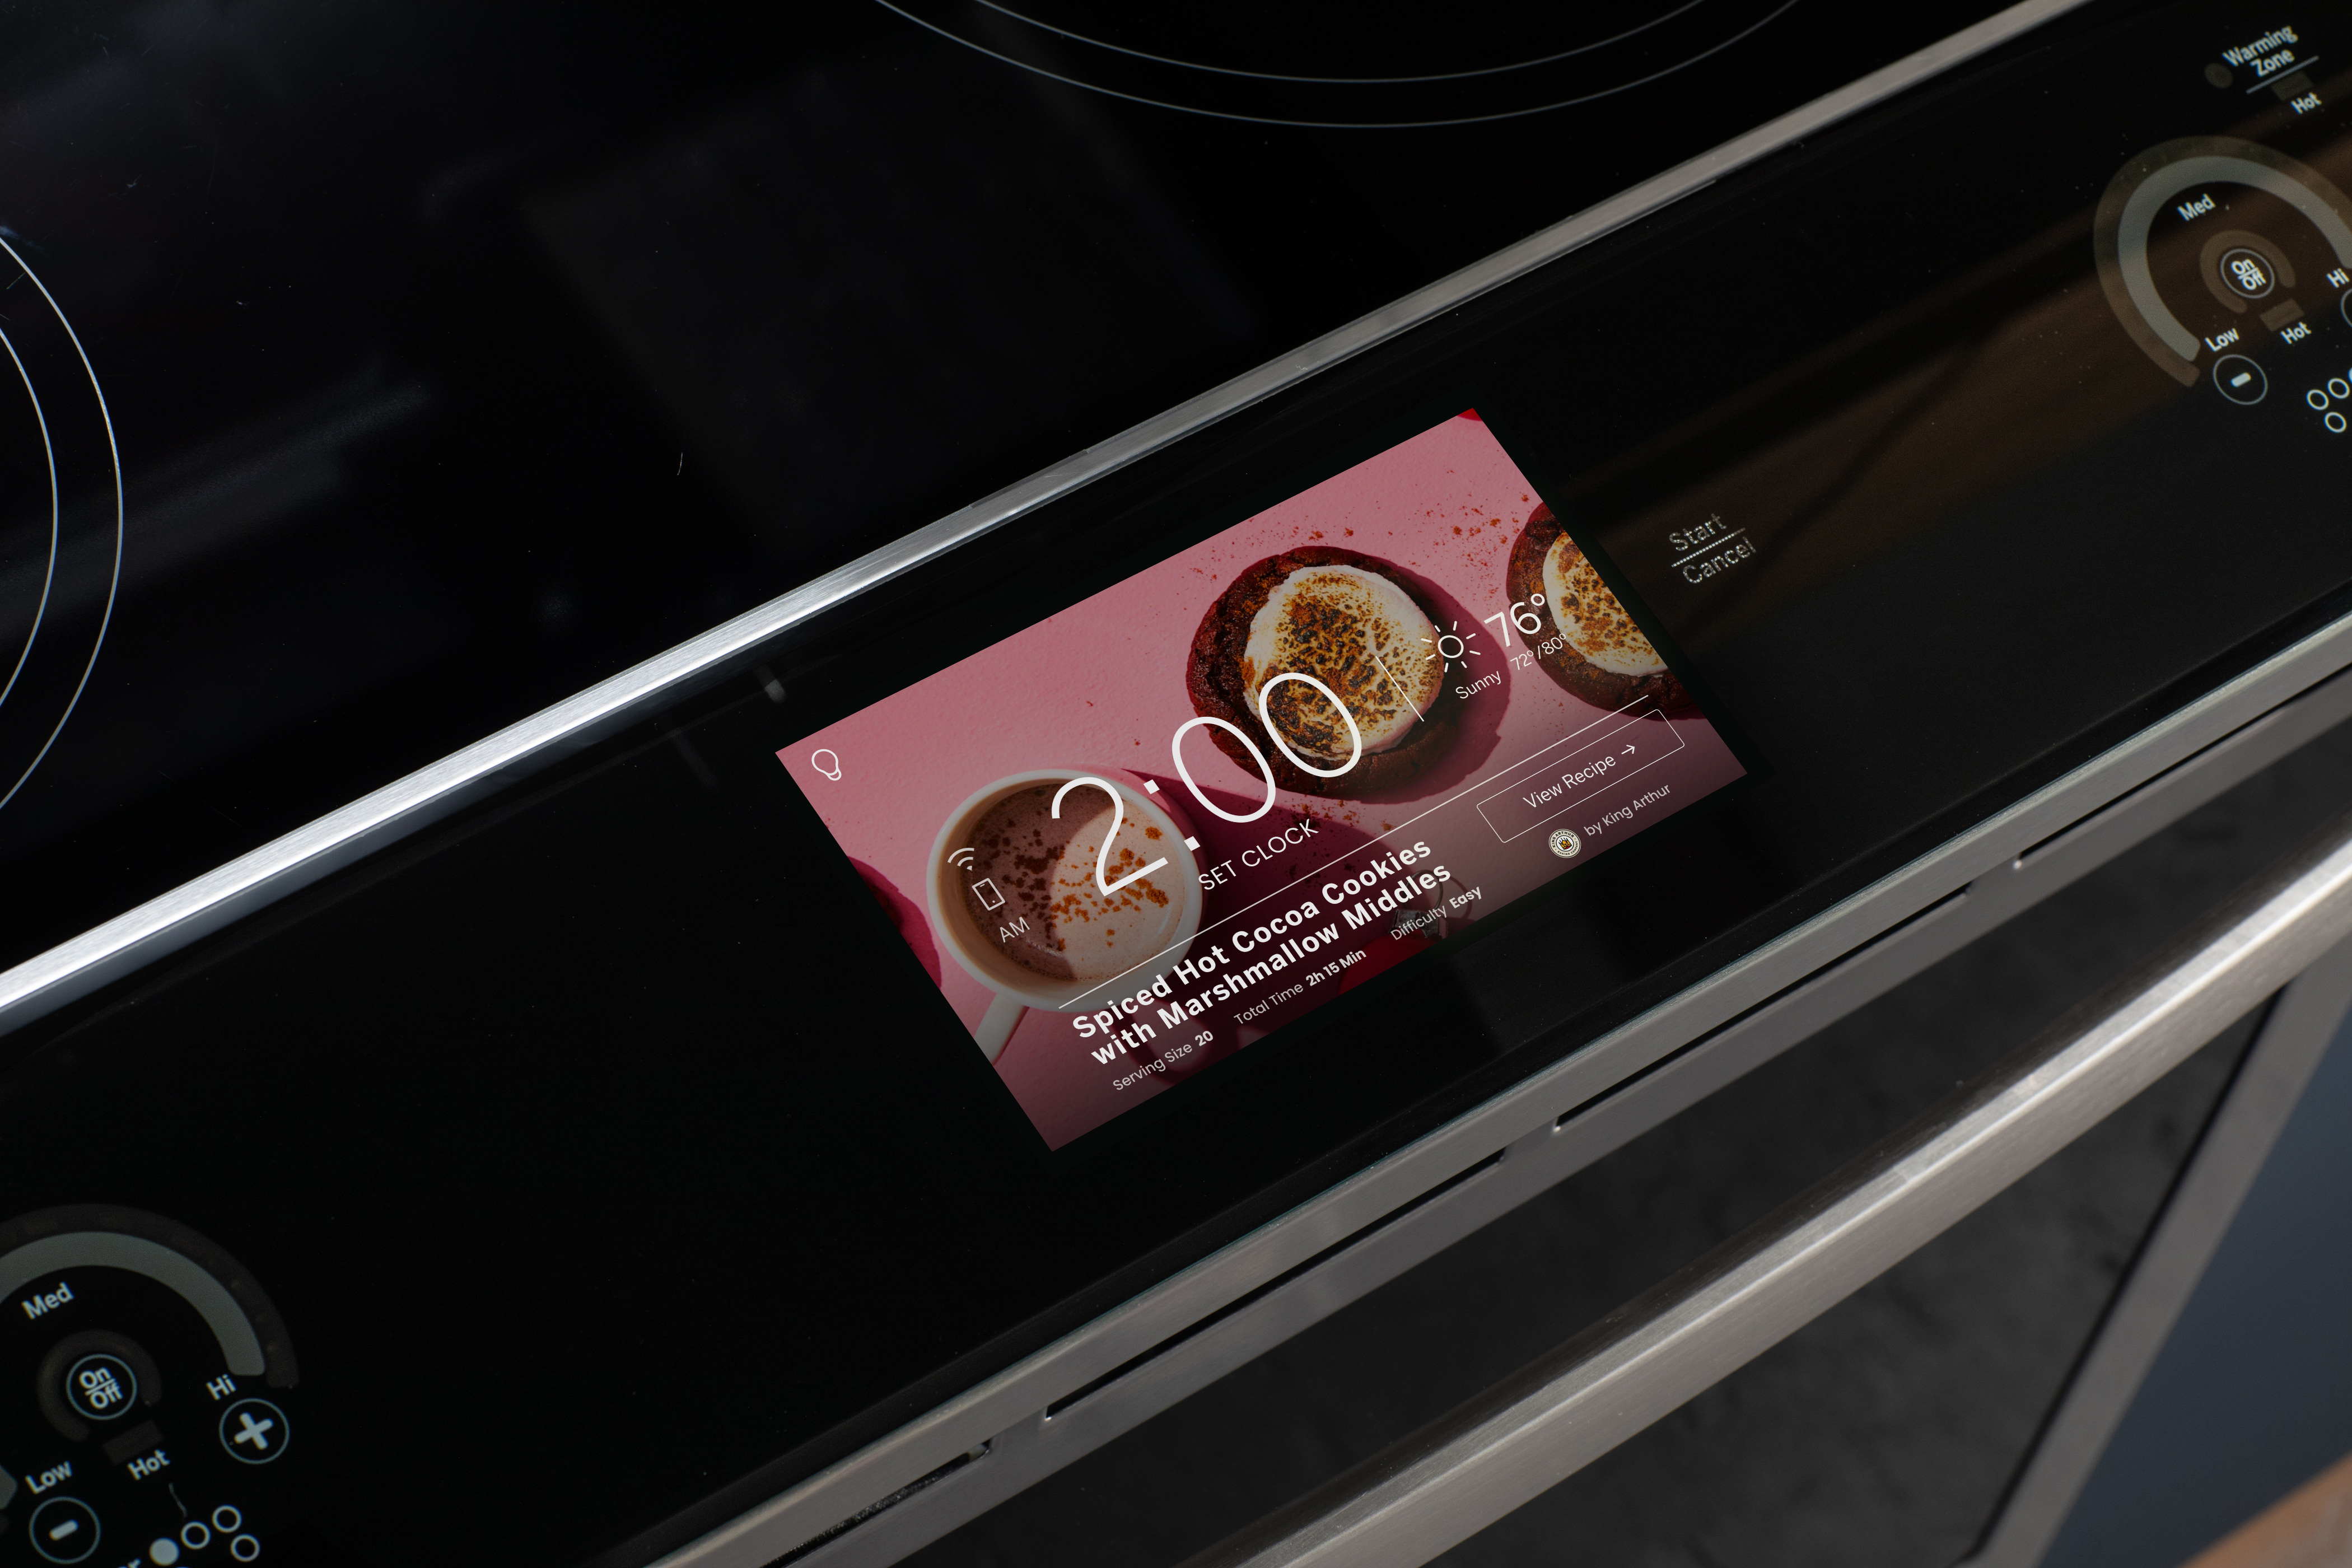 https://geappliancesco.com/product_images/uploaded_images/ge-profile-slide-in-range-with-slide-controls-king-arthur-baking-hot-cocoa-cookies.jpg